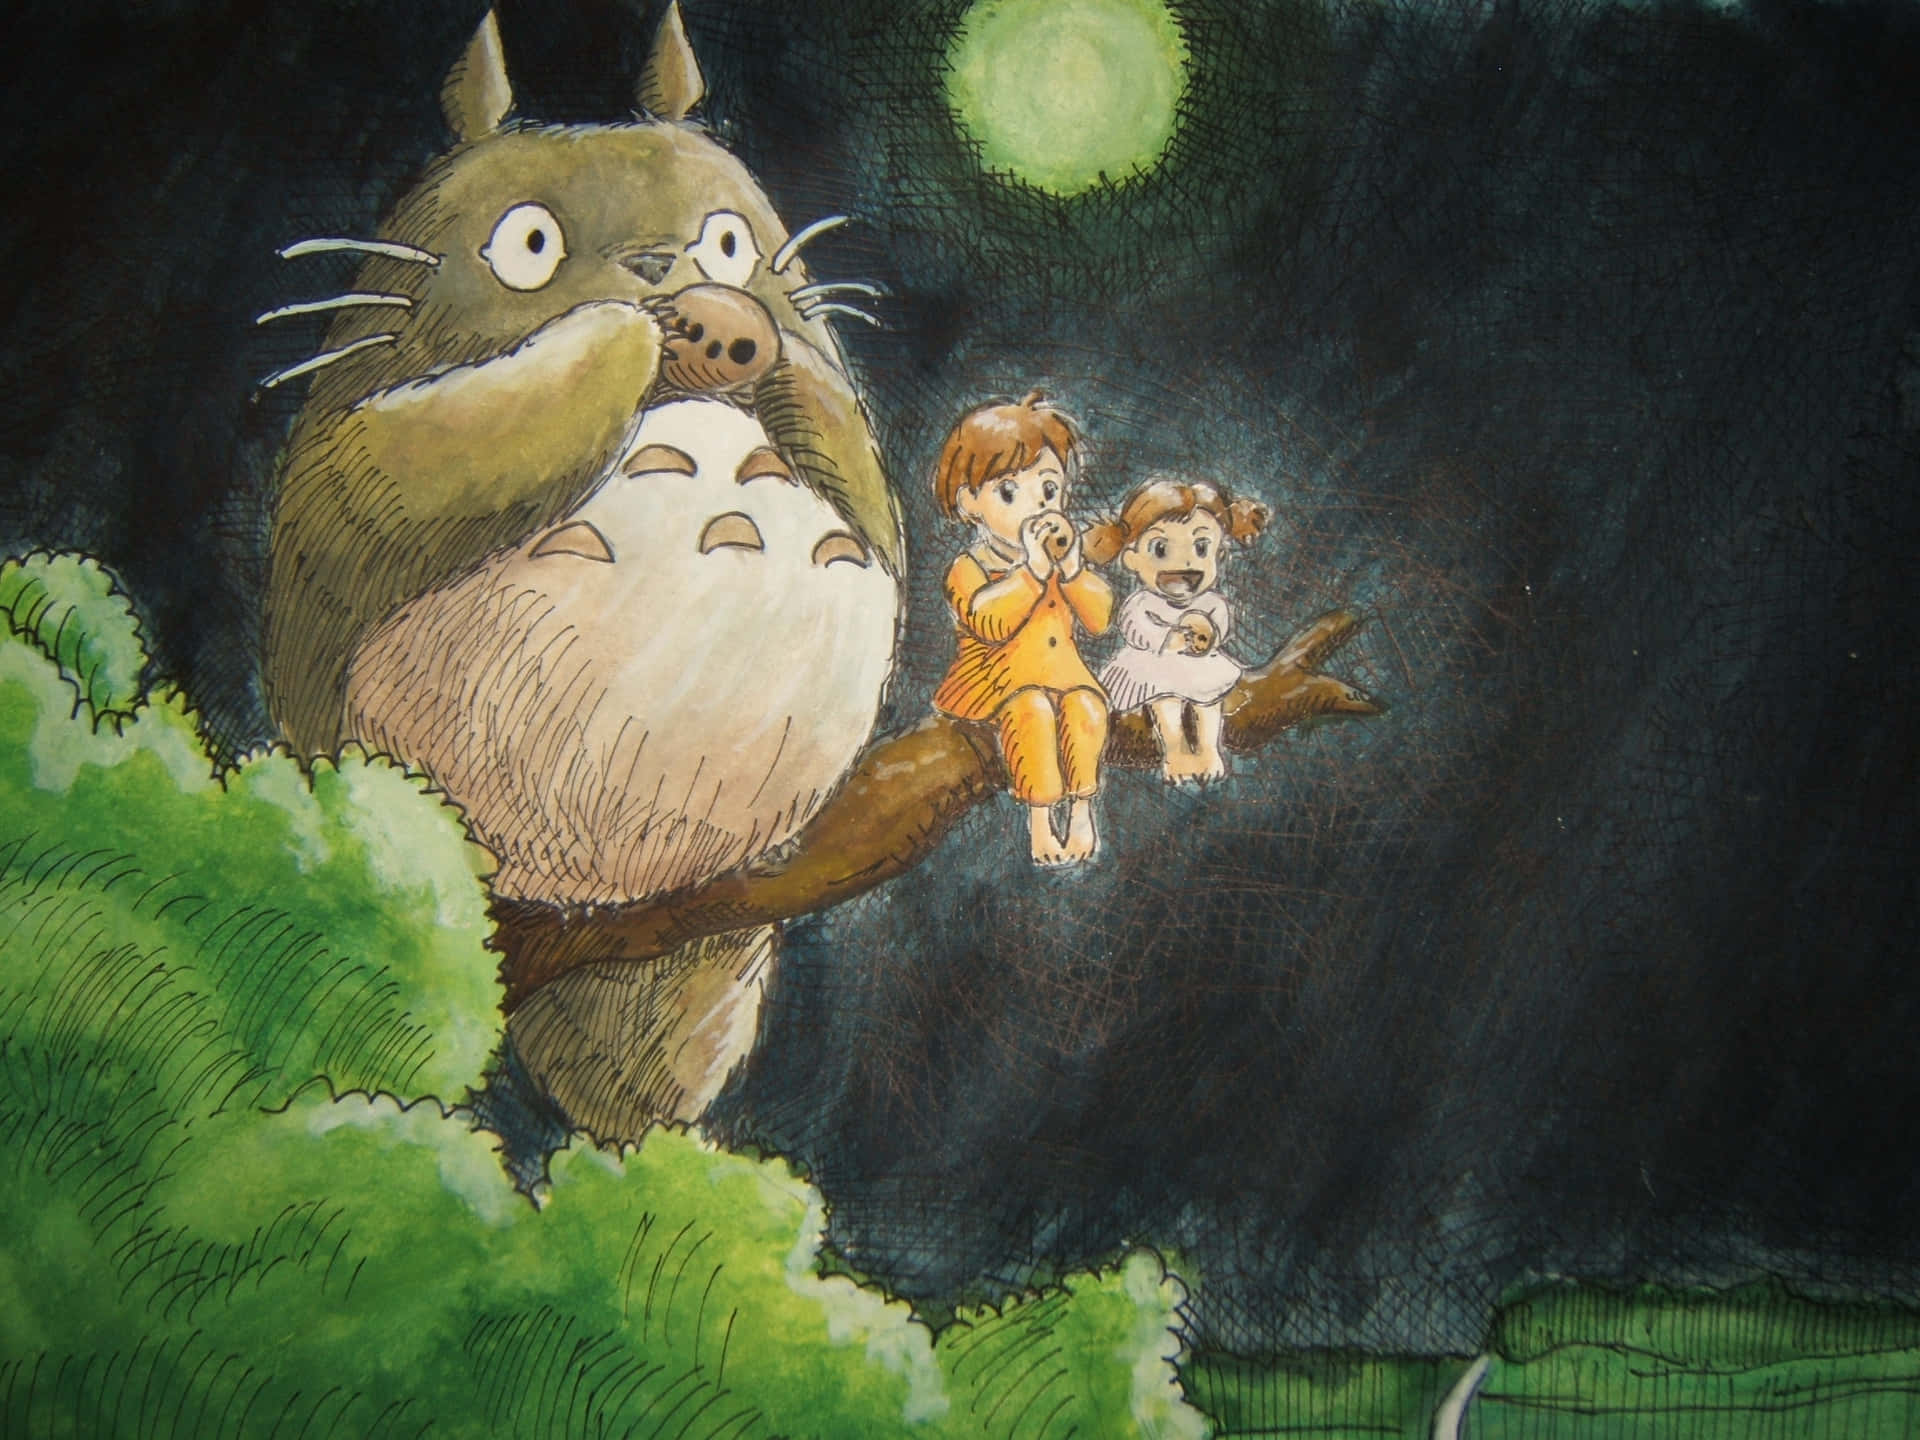 Catch the magical spirit of Totoro